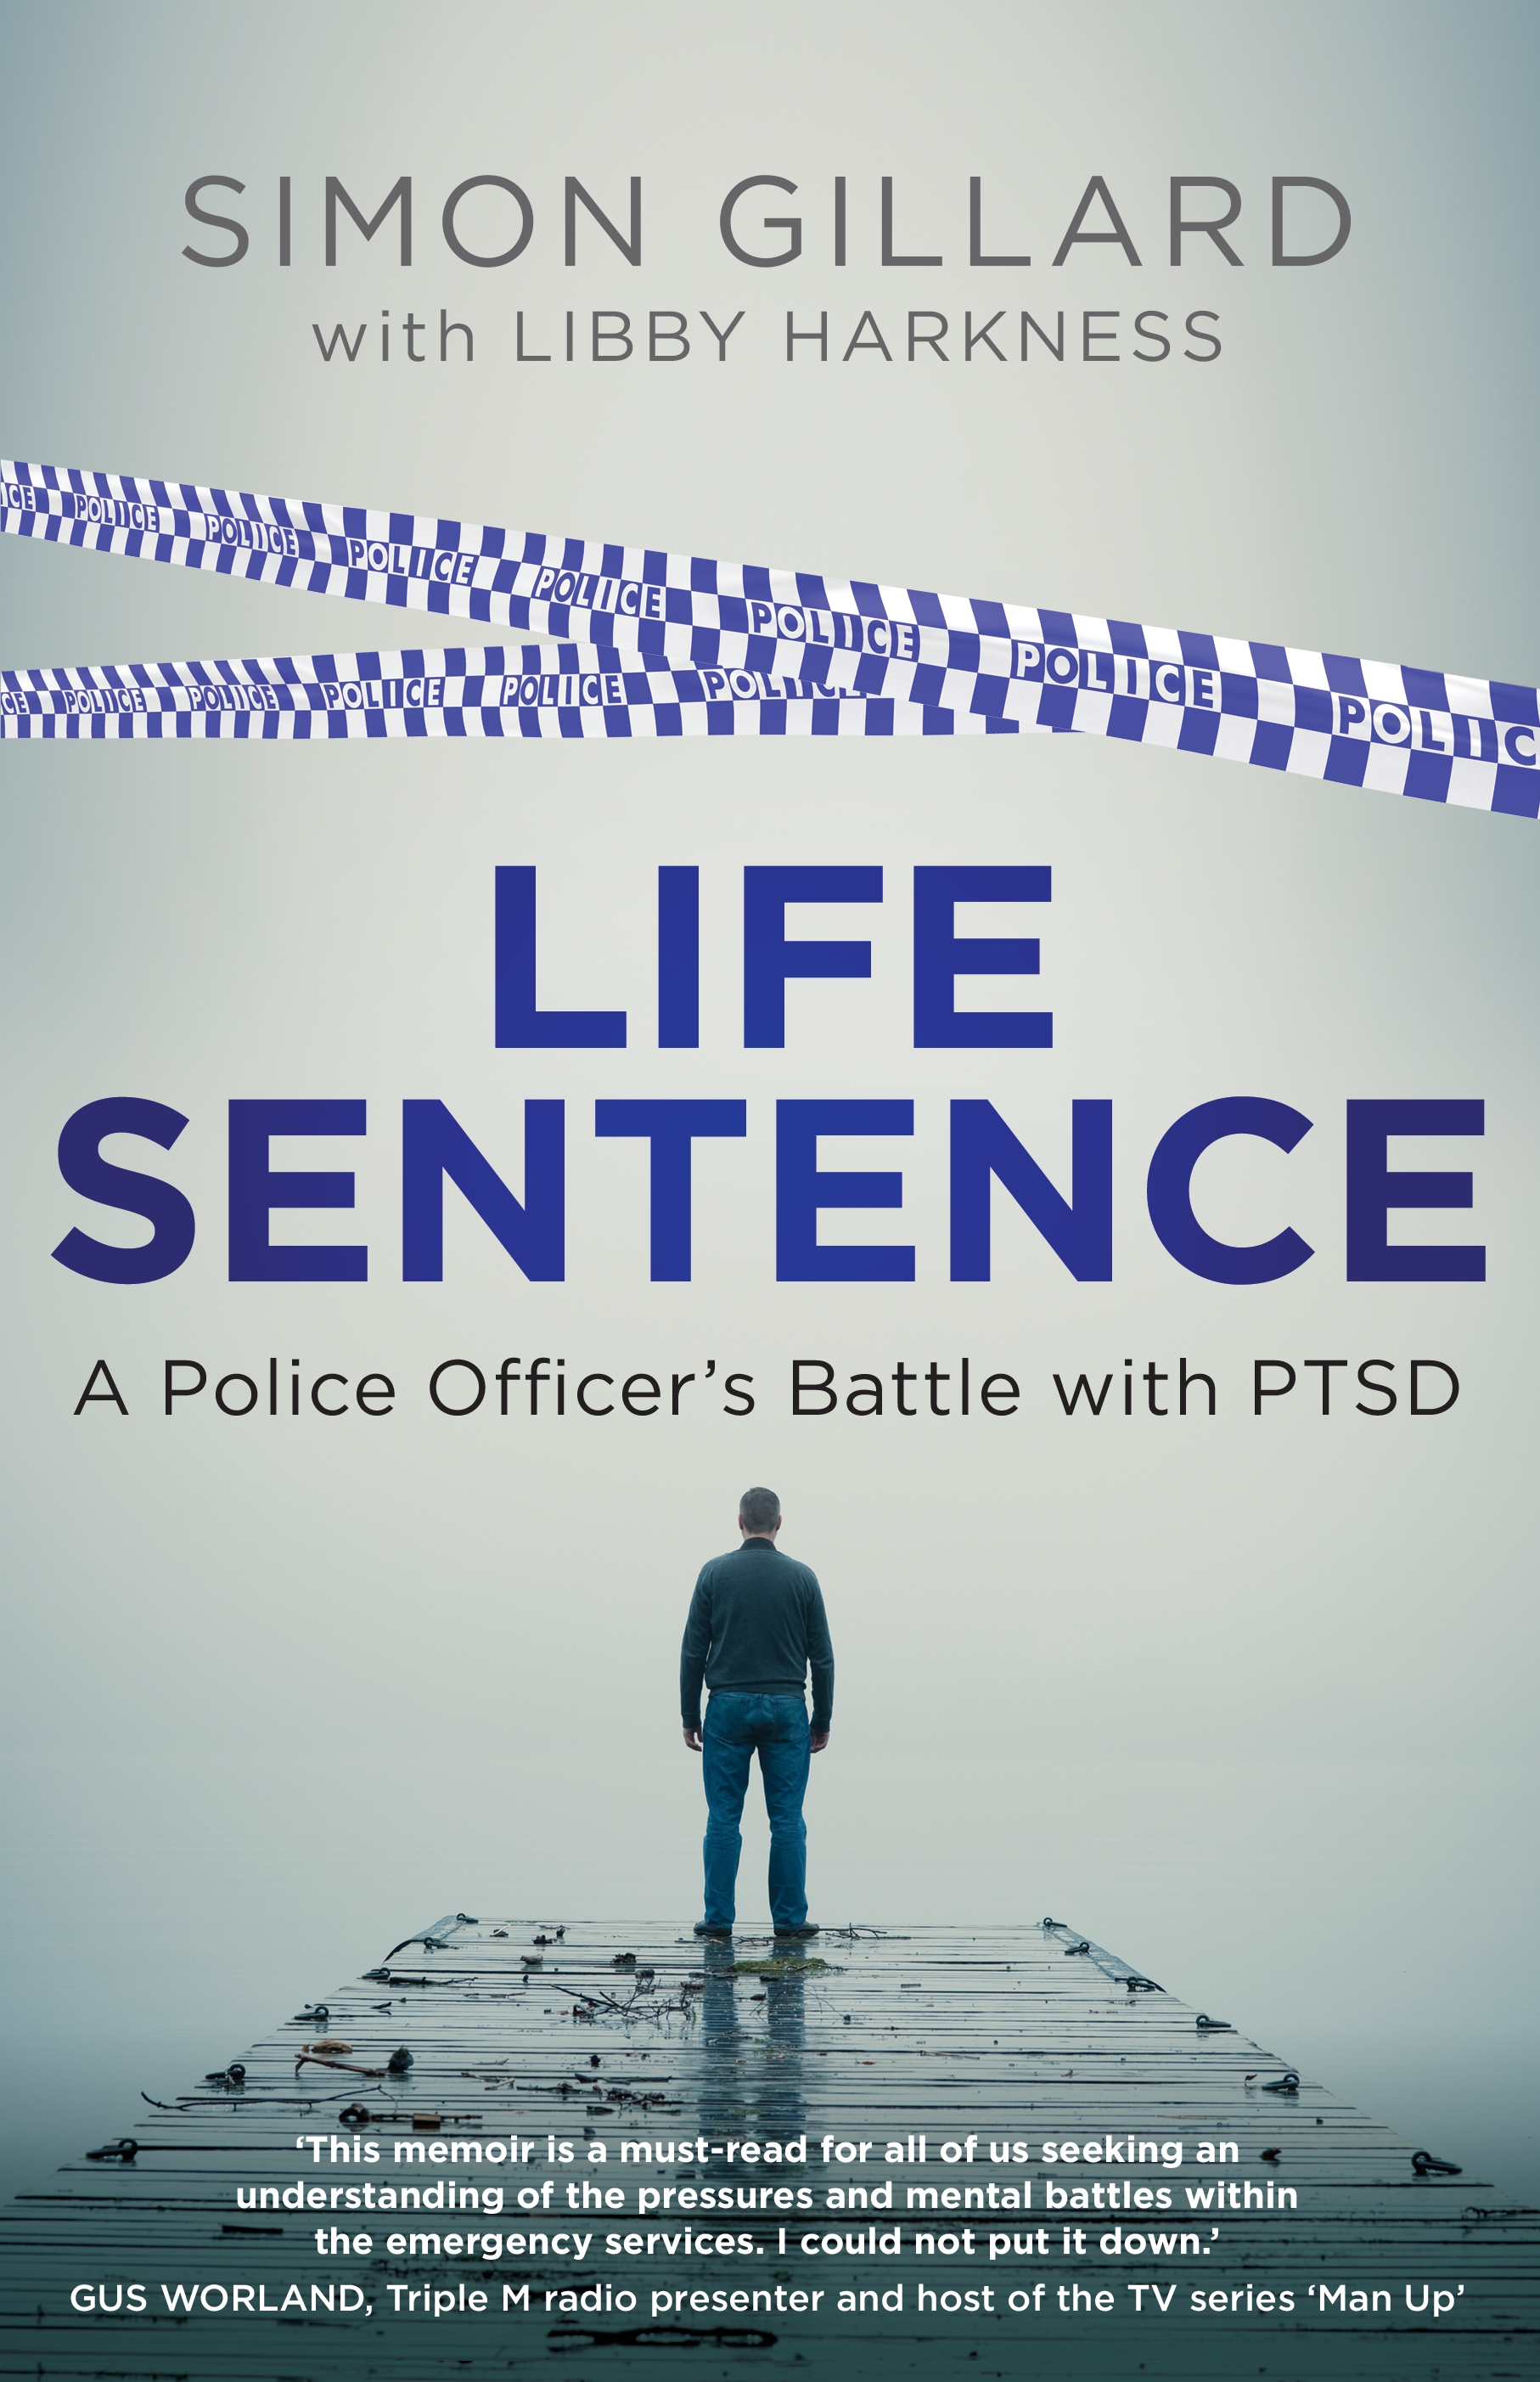 life sentence book review